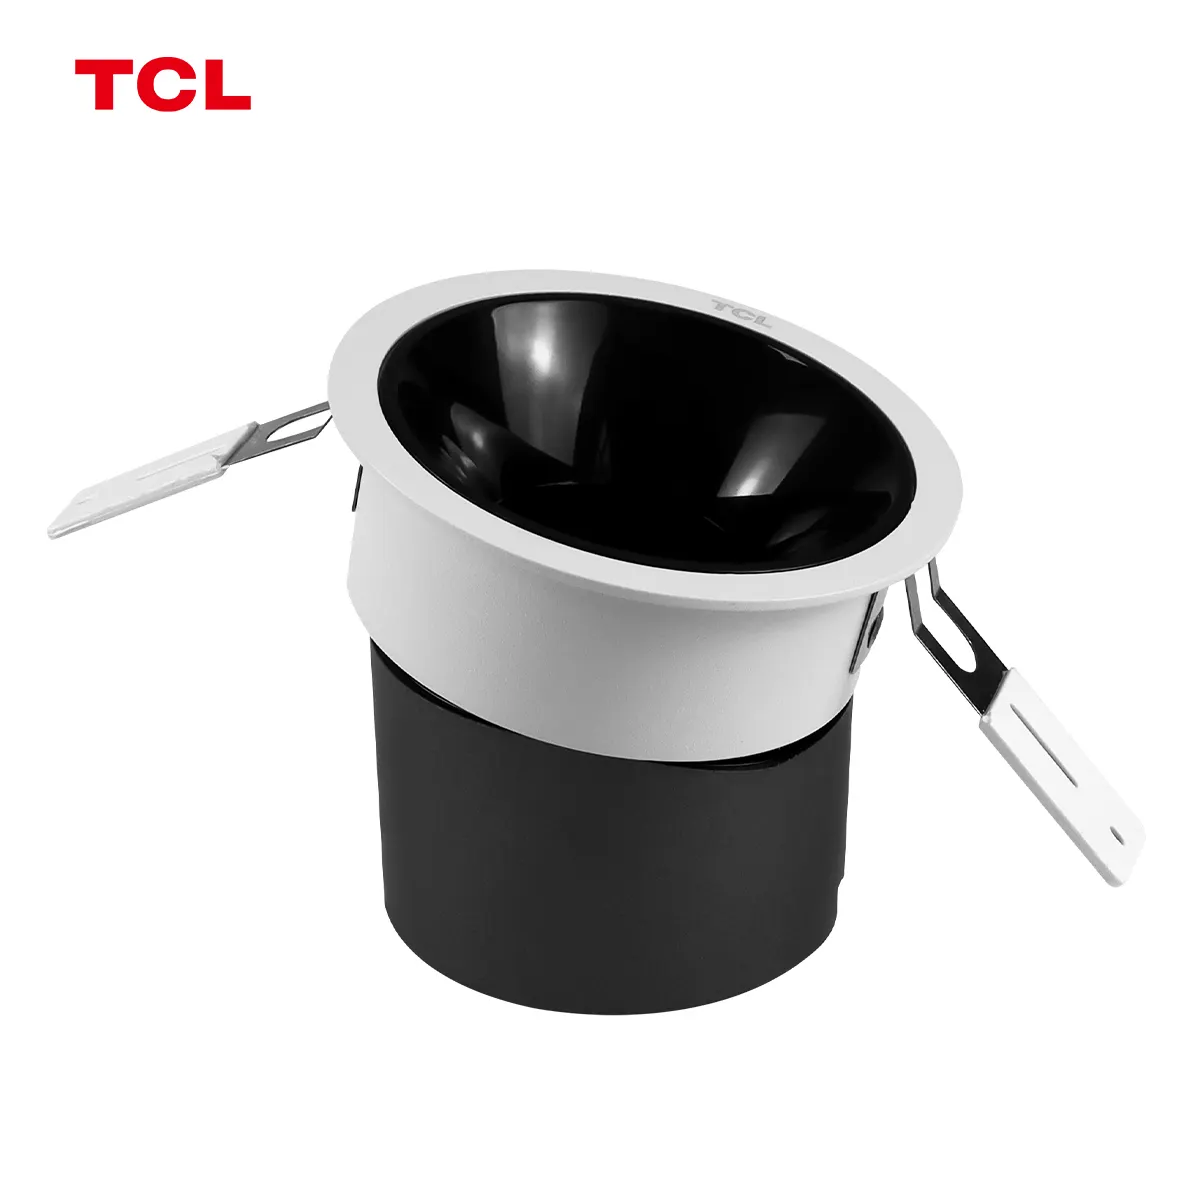 TCL 9W 3000K/4000K/6500K זרקור שקוע אור טבעי עבור זרקור led מתכת שחור למטבח ביתי זרקור משרדי